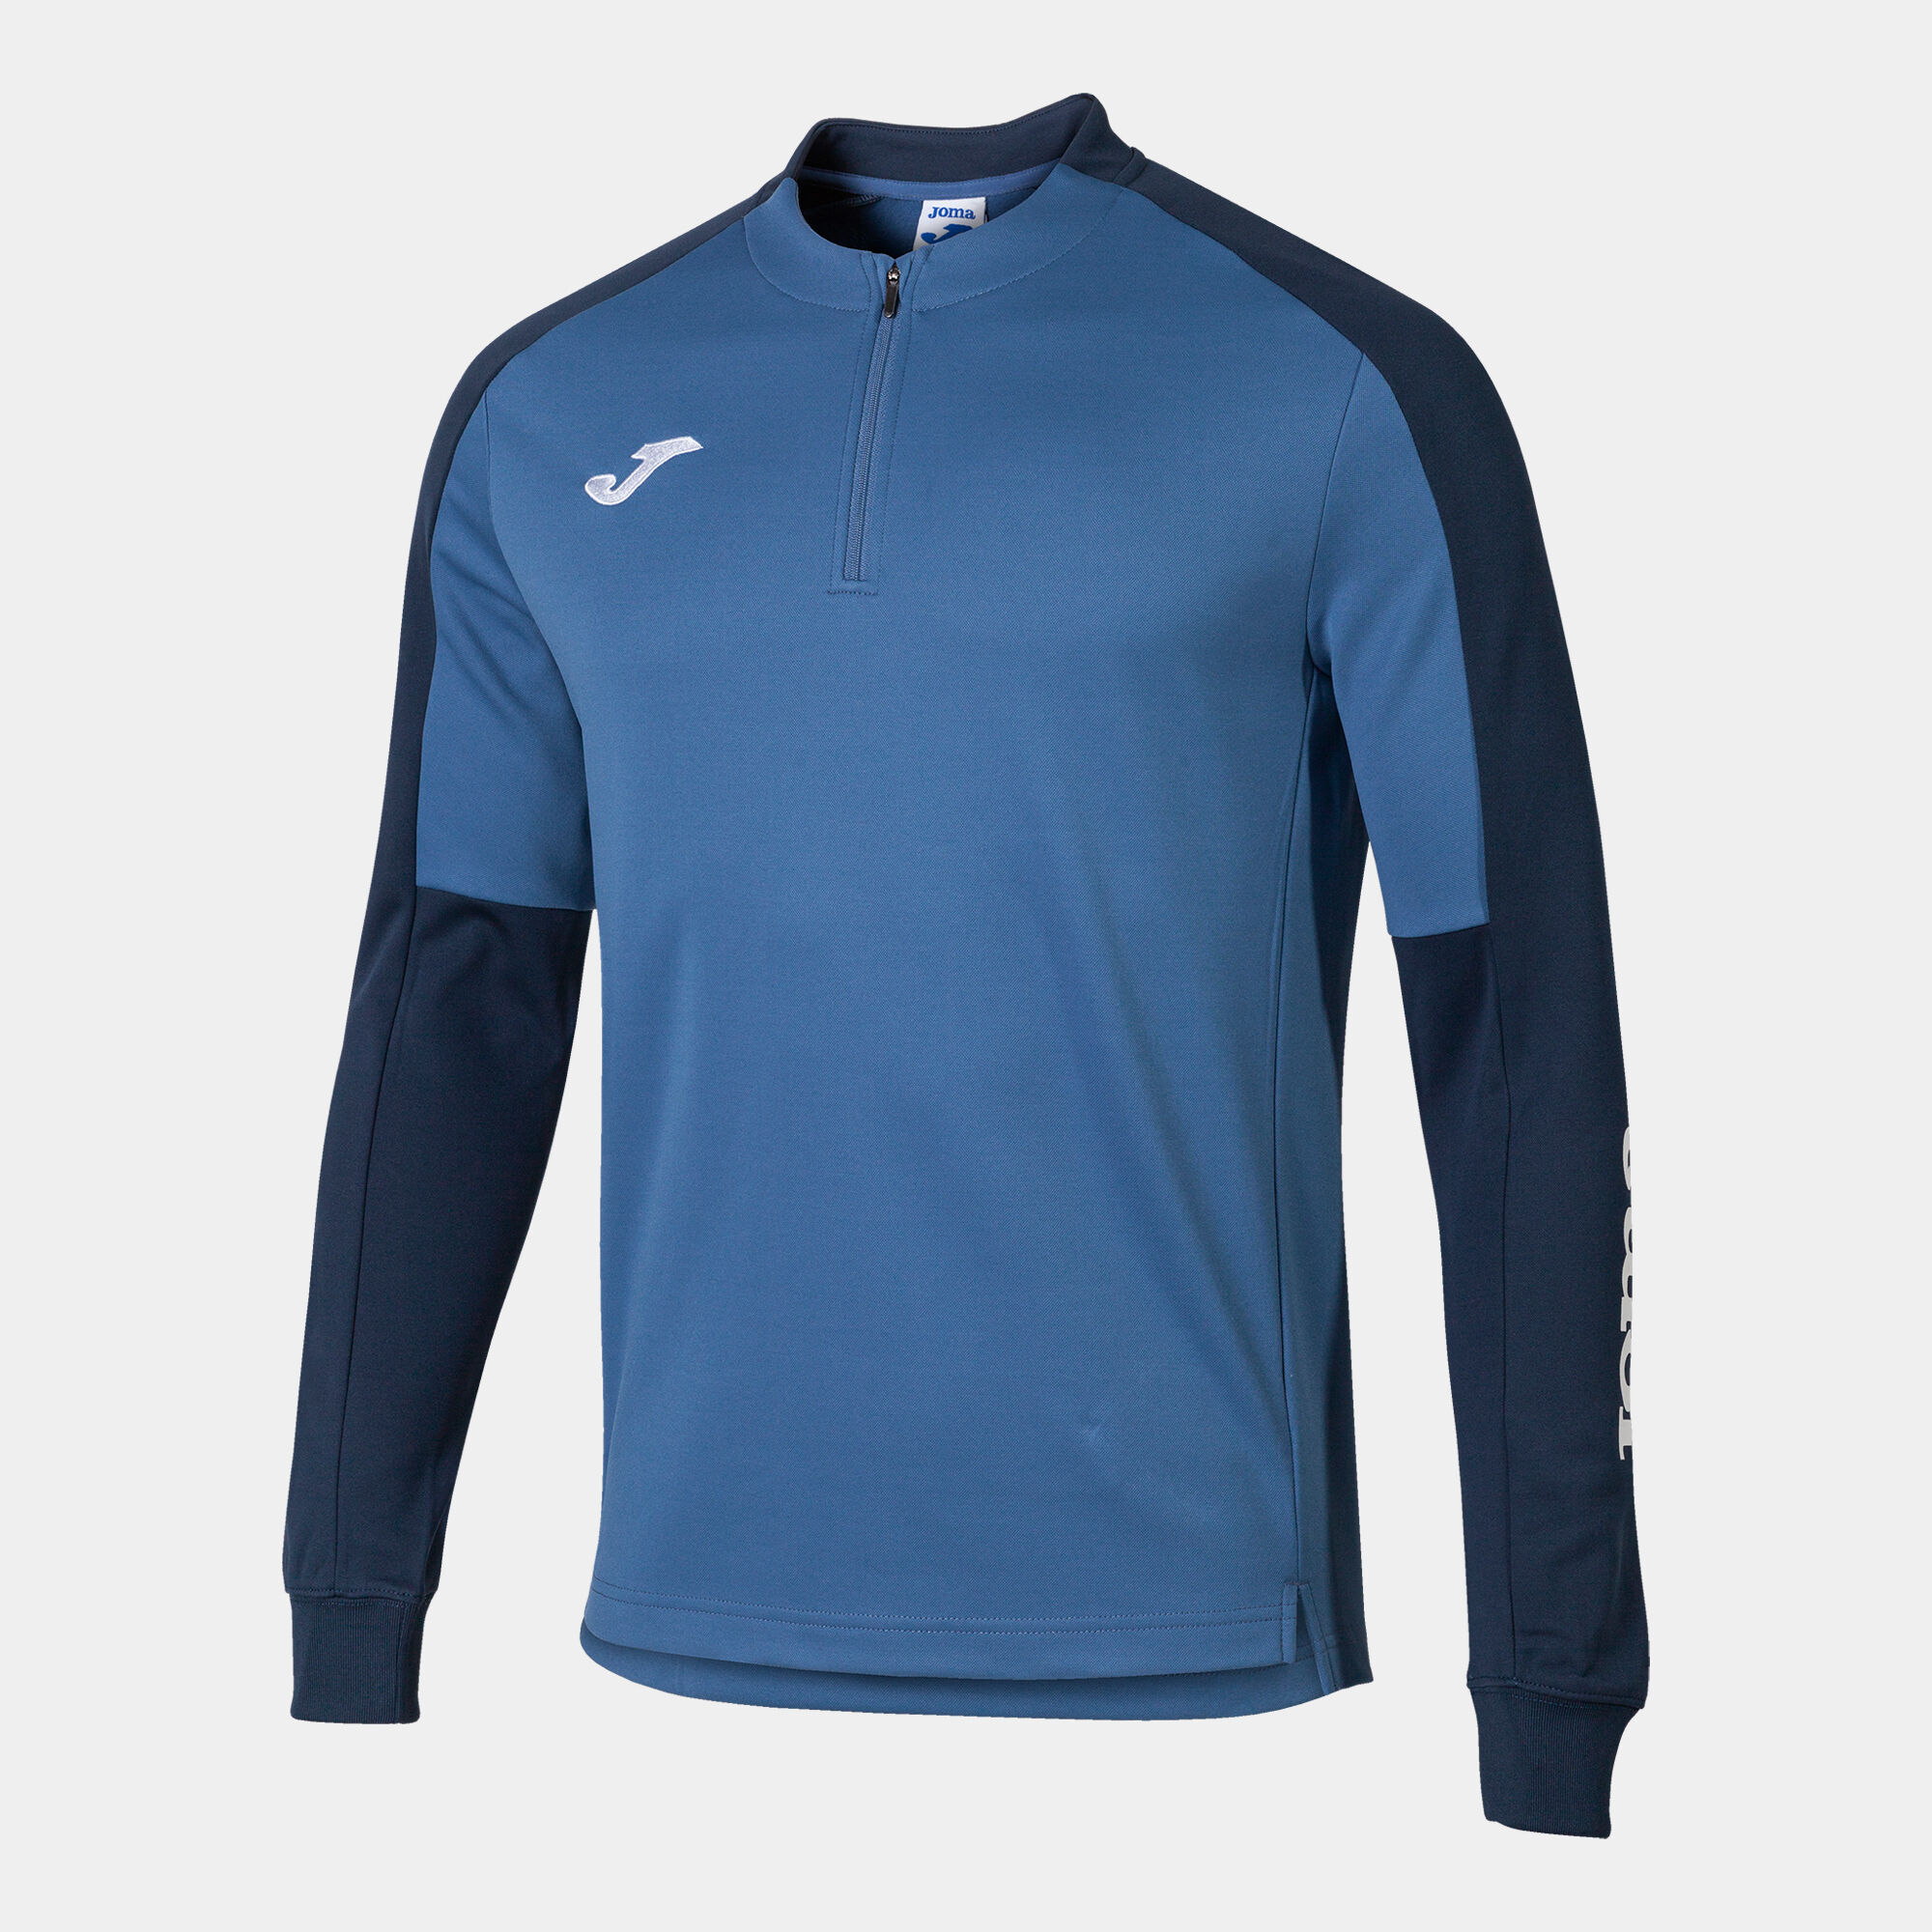 Sweat-shirt homme Eco Championship bleu bleu marine